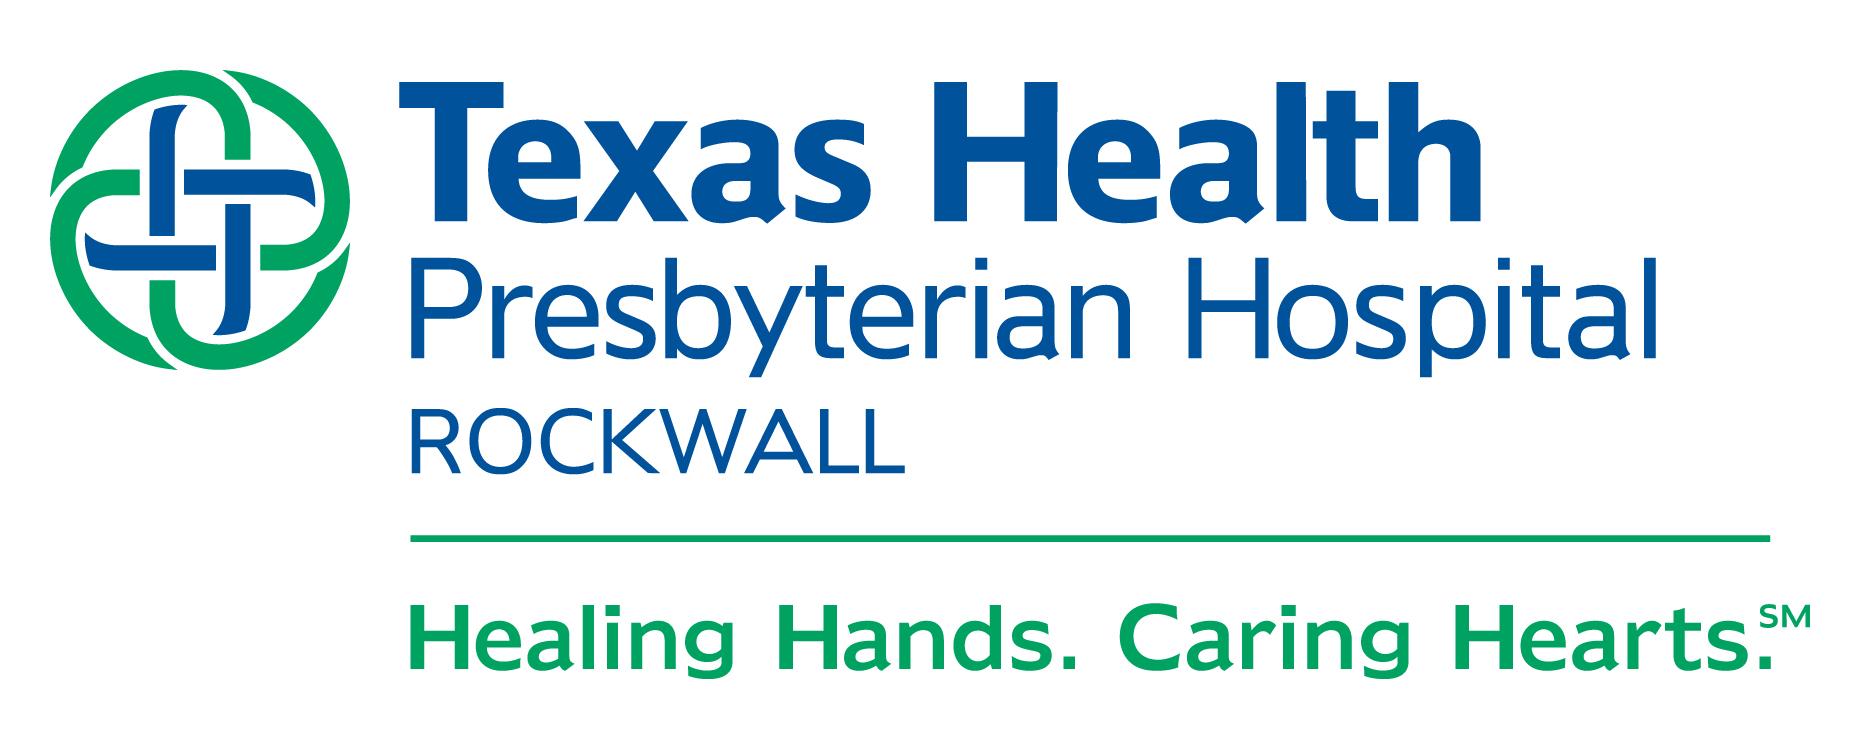 Texas Health Presbyterian Hospital Rockwall